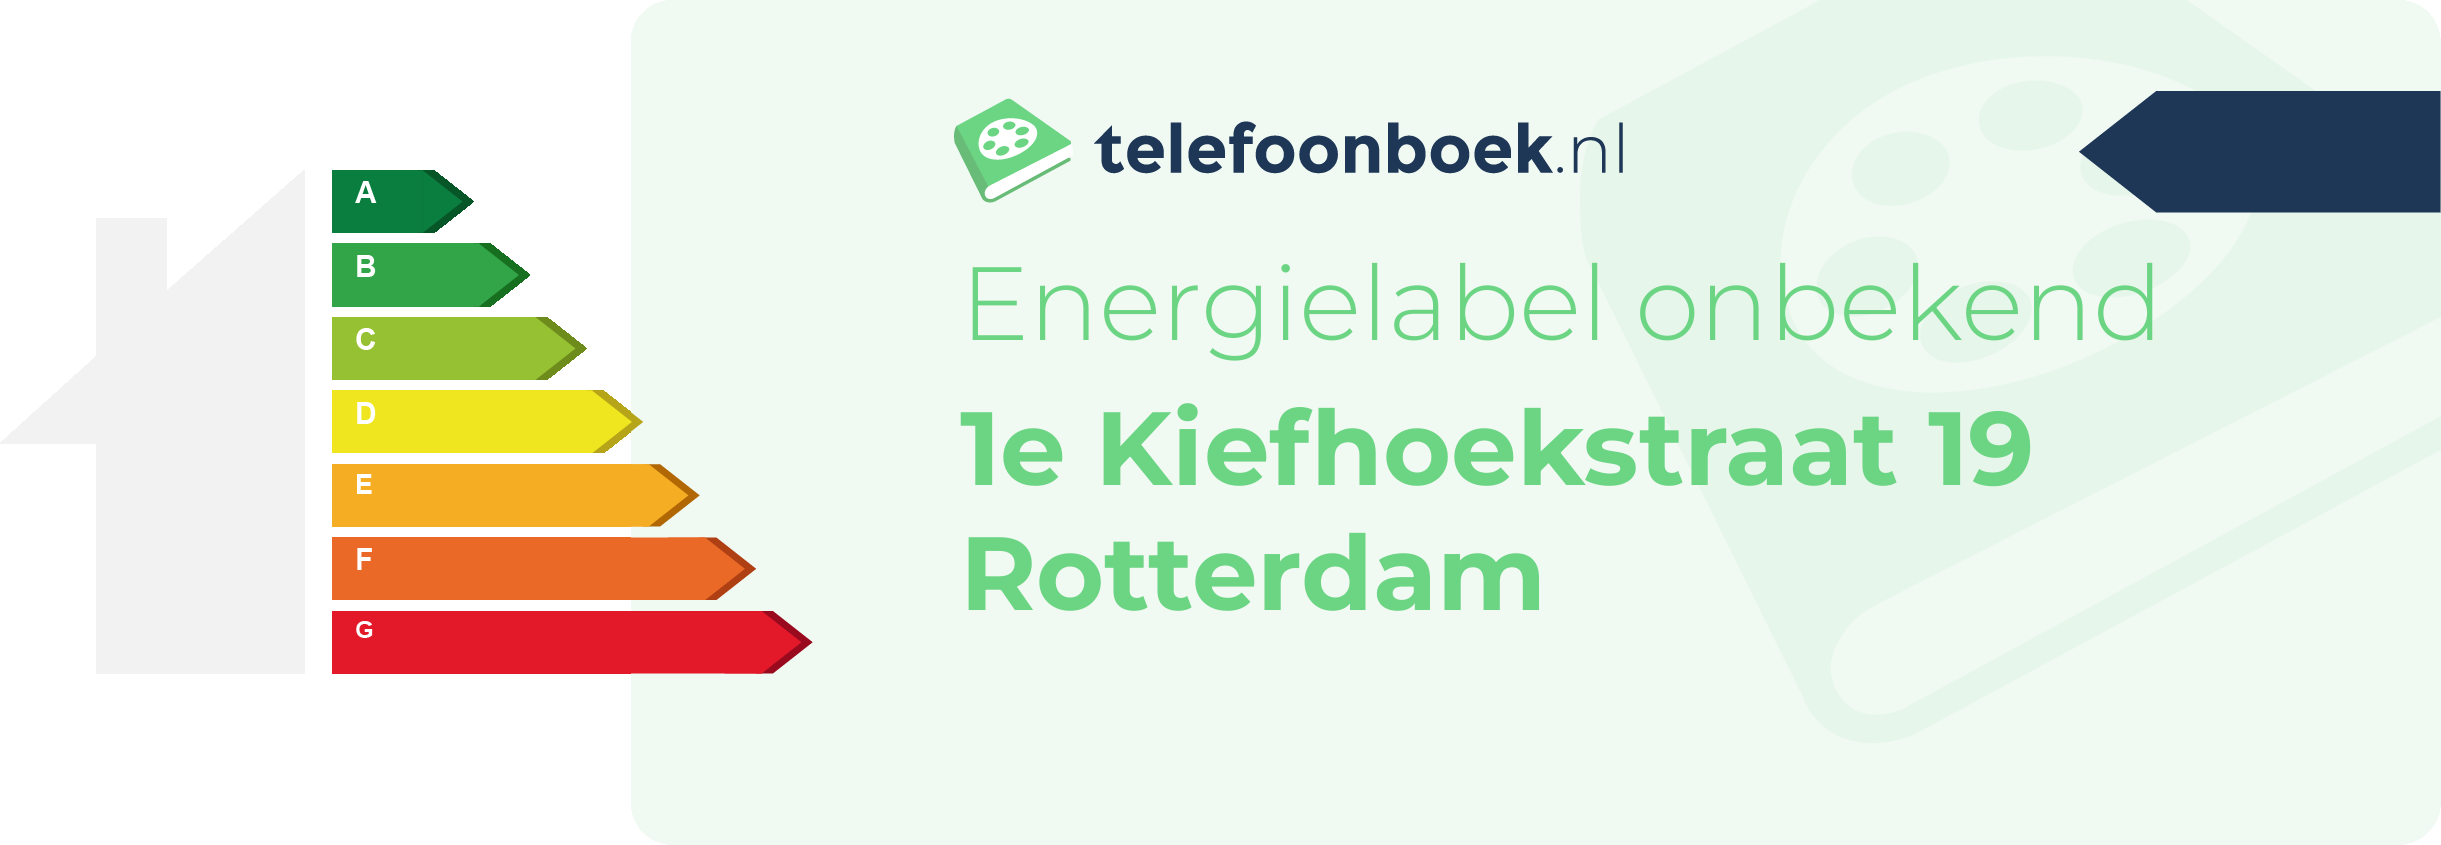 Energielabel 1e Kiefhoekstraat 19 Rotterdam